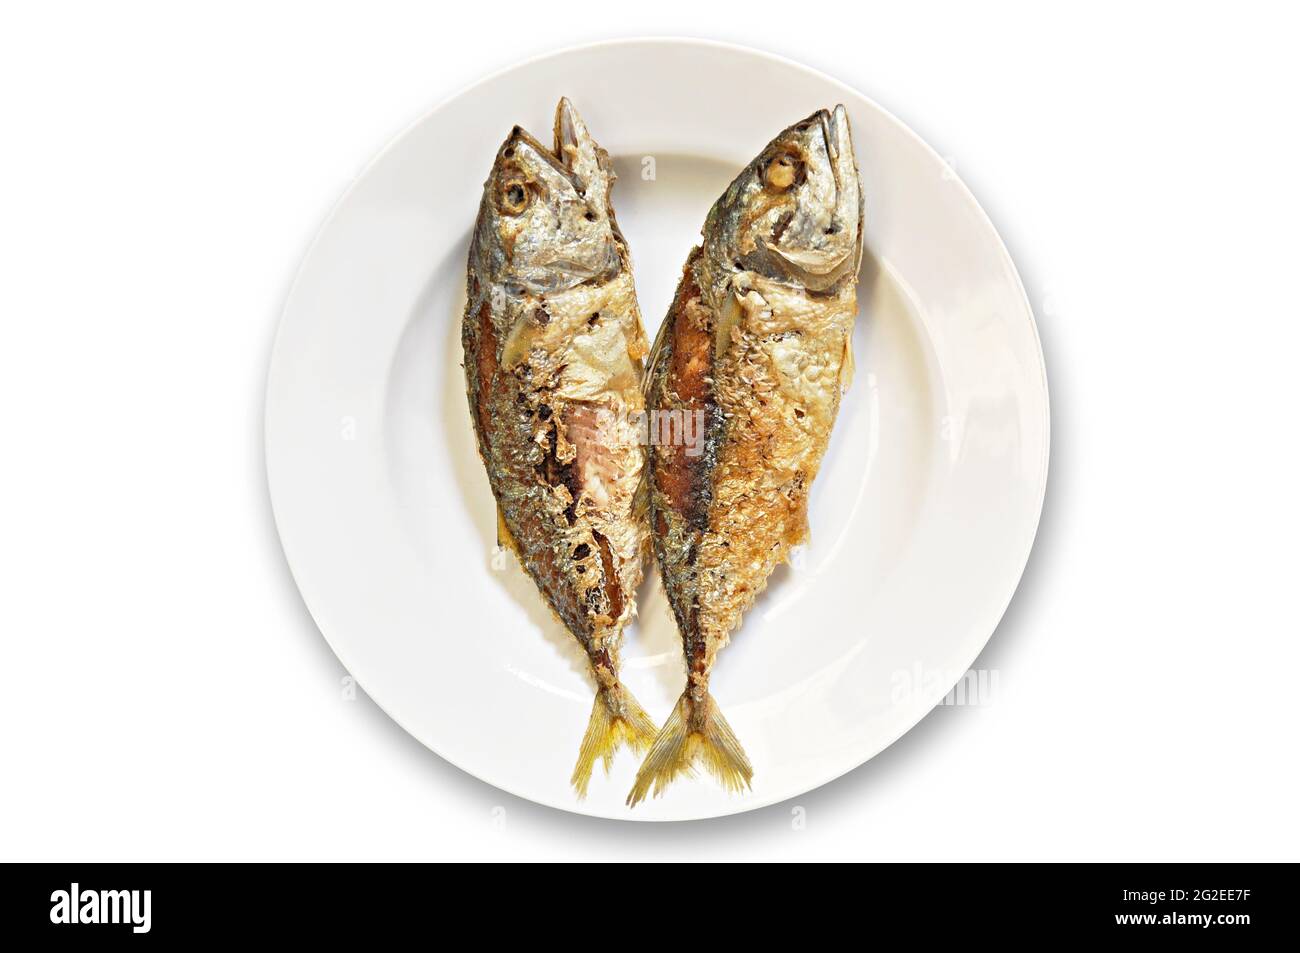 Thai style fried mackerel fish in white dish Stock Photo